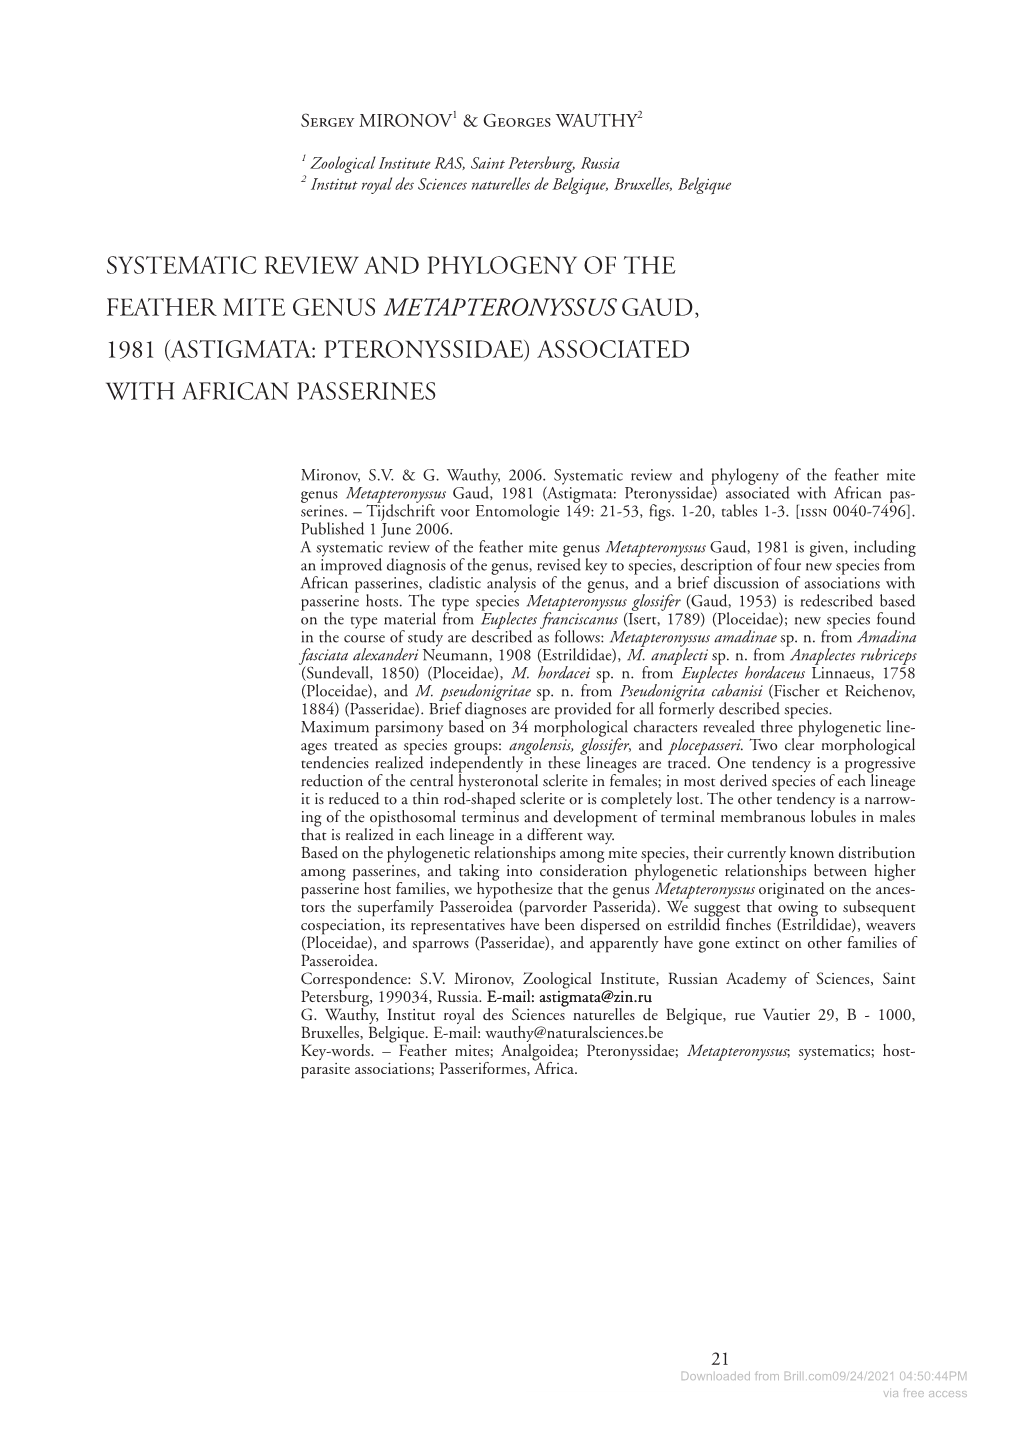 Astigmata: Pteronyssidae) Associated with African Passerines